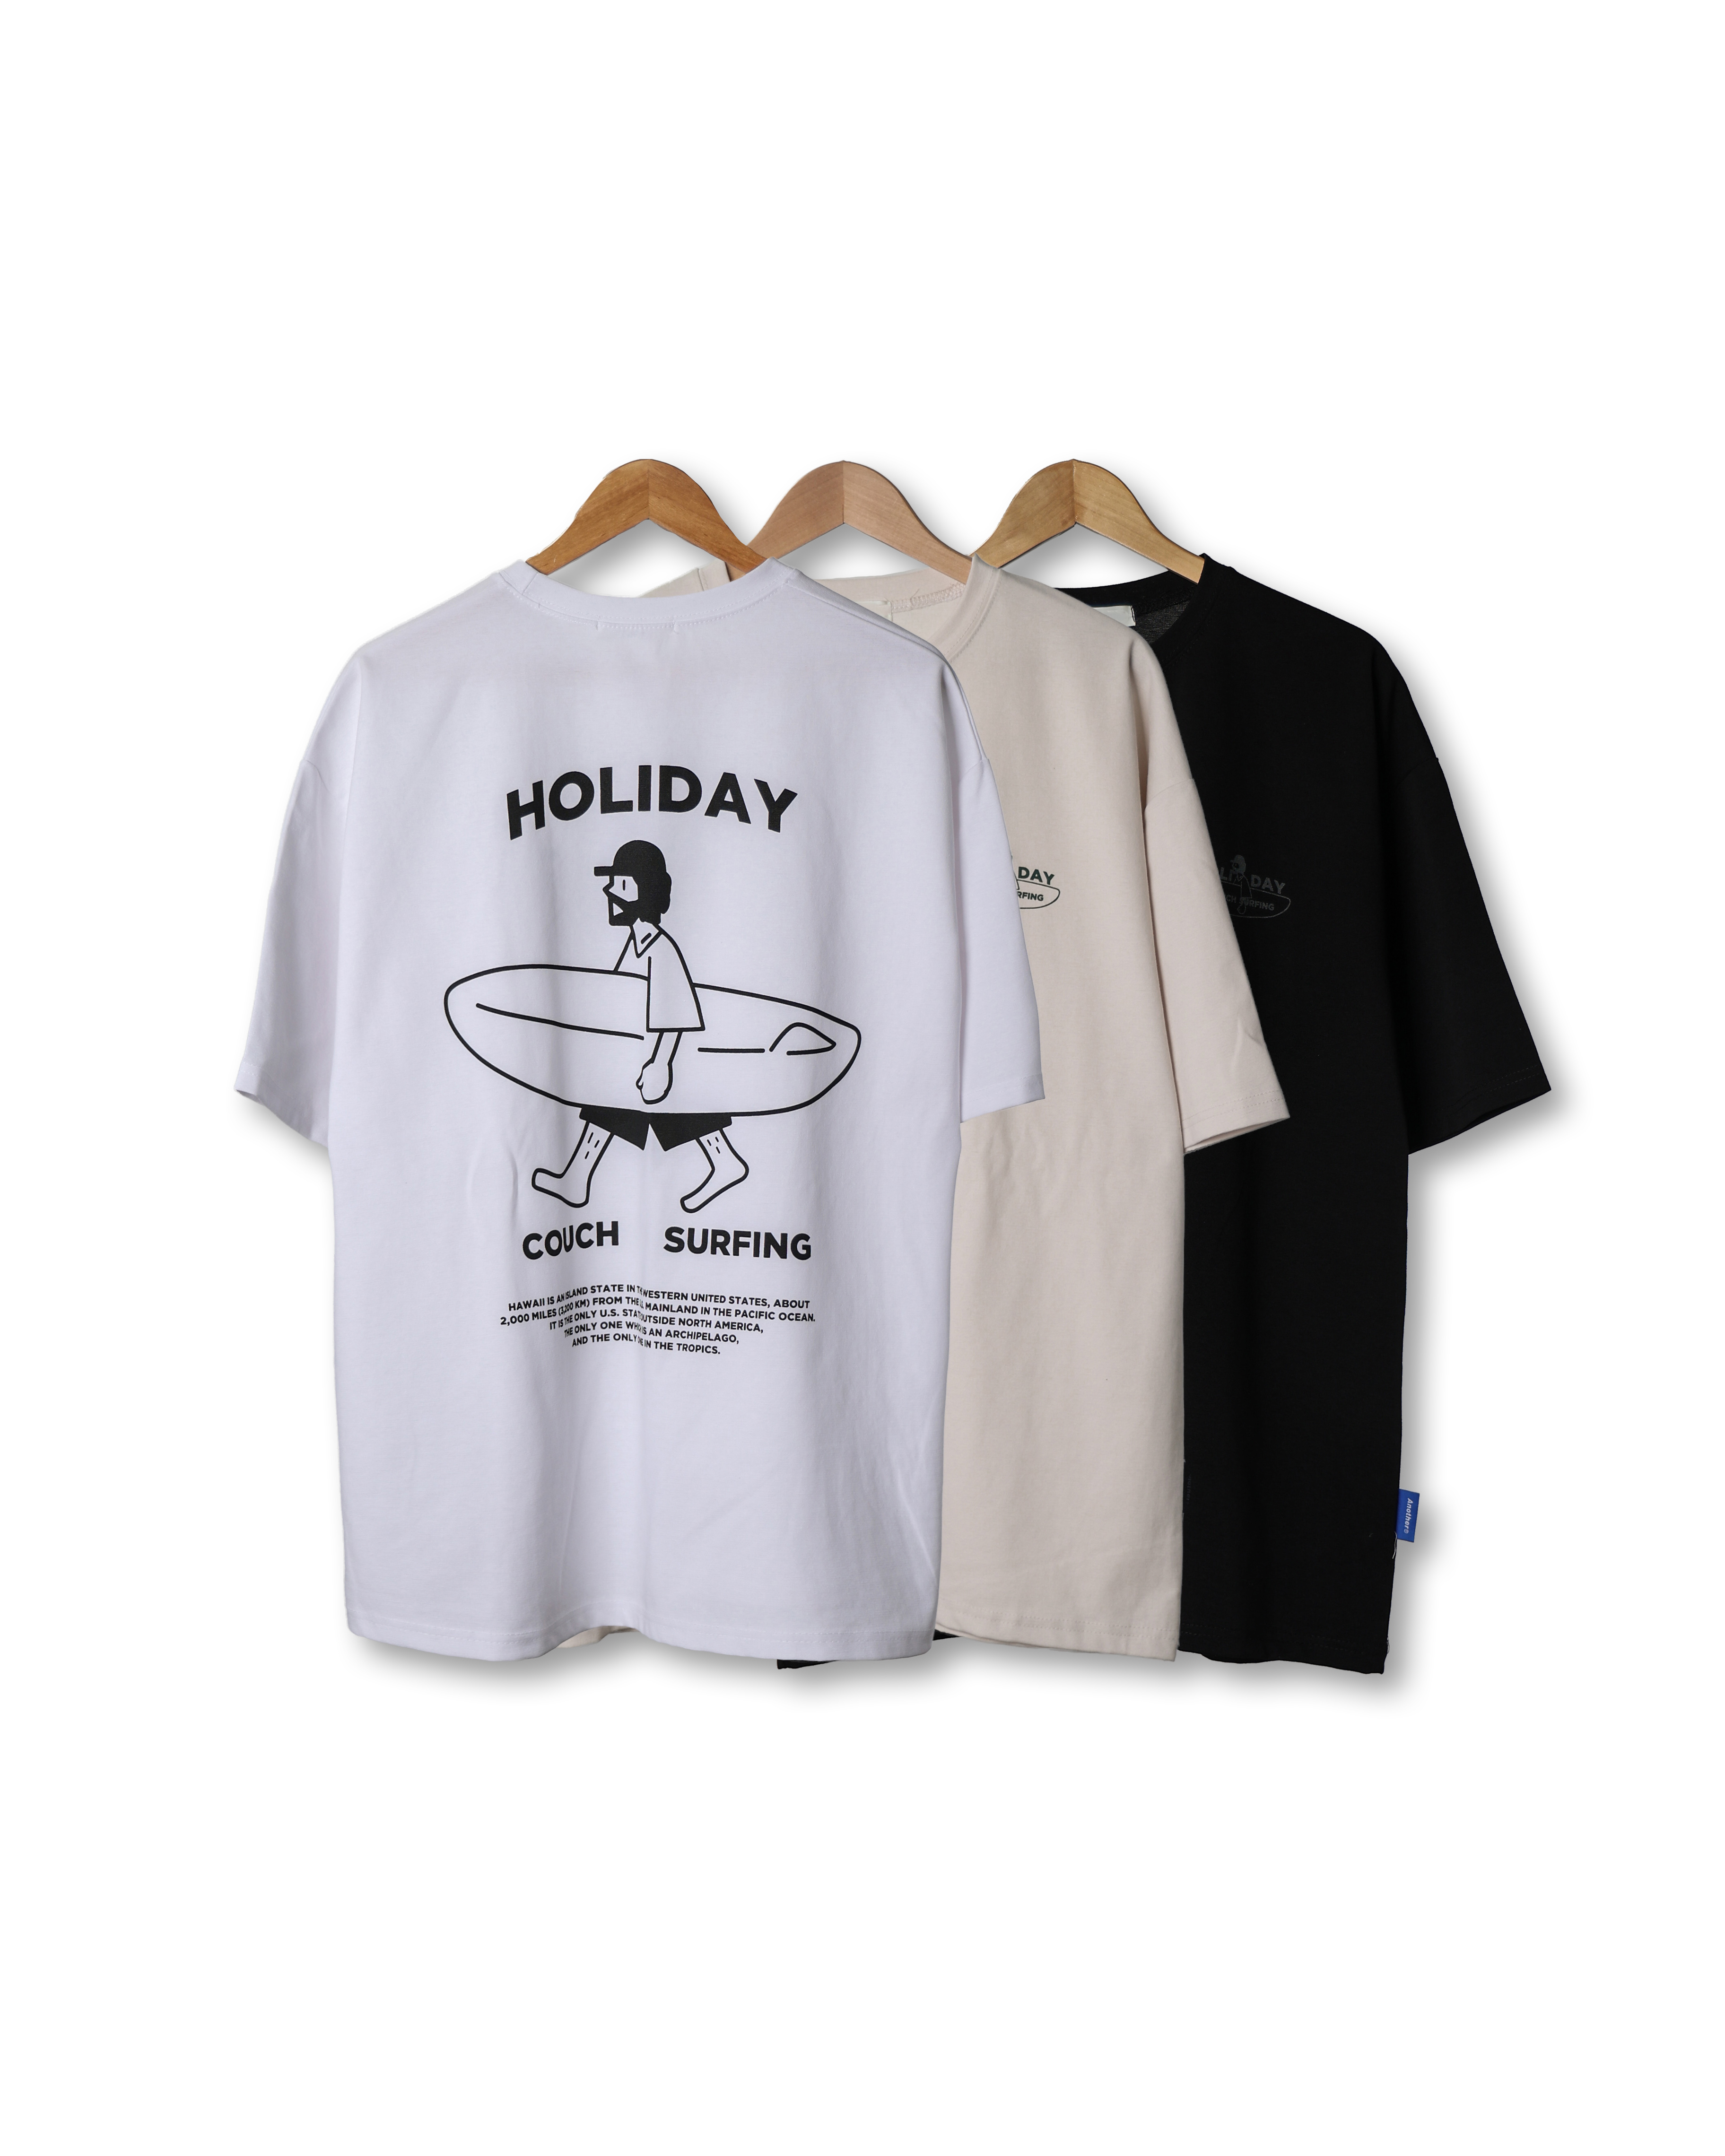 ANOTHR HOLIDAY SURF Summer T Shirts (Black/Cream/White) - 2차 리오더 (5/23 배송예정)